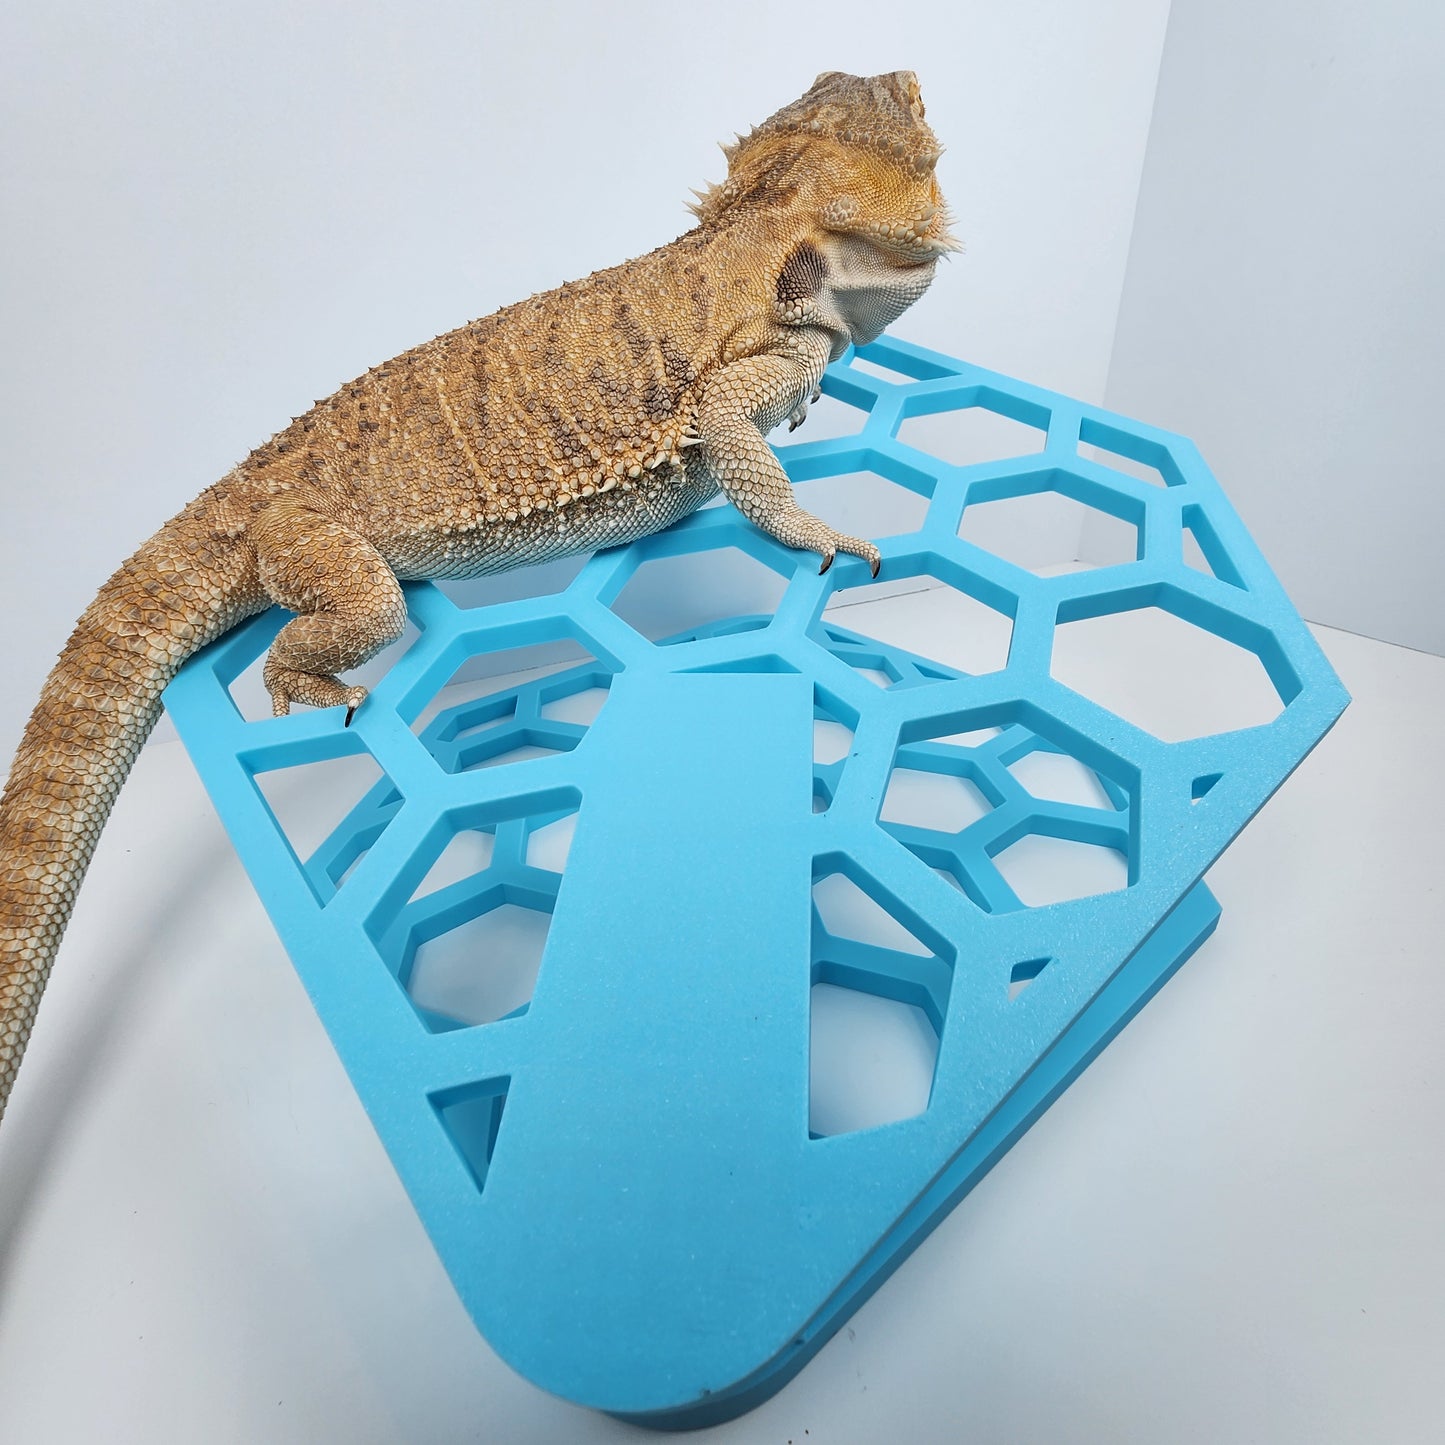 Hexagonal Reptile Basking platform | Basking Hammock Lounger | Bearded dragon and reptile lounging spot